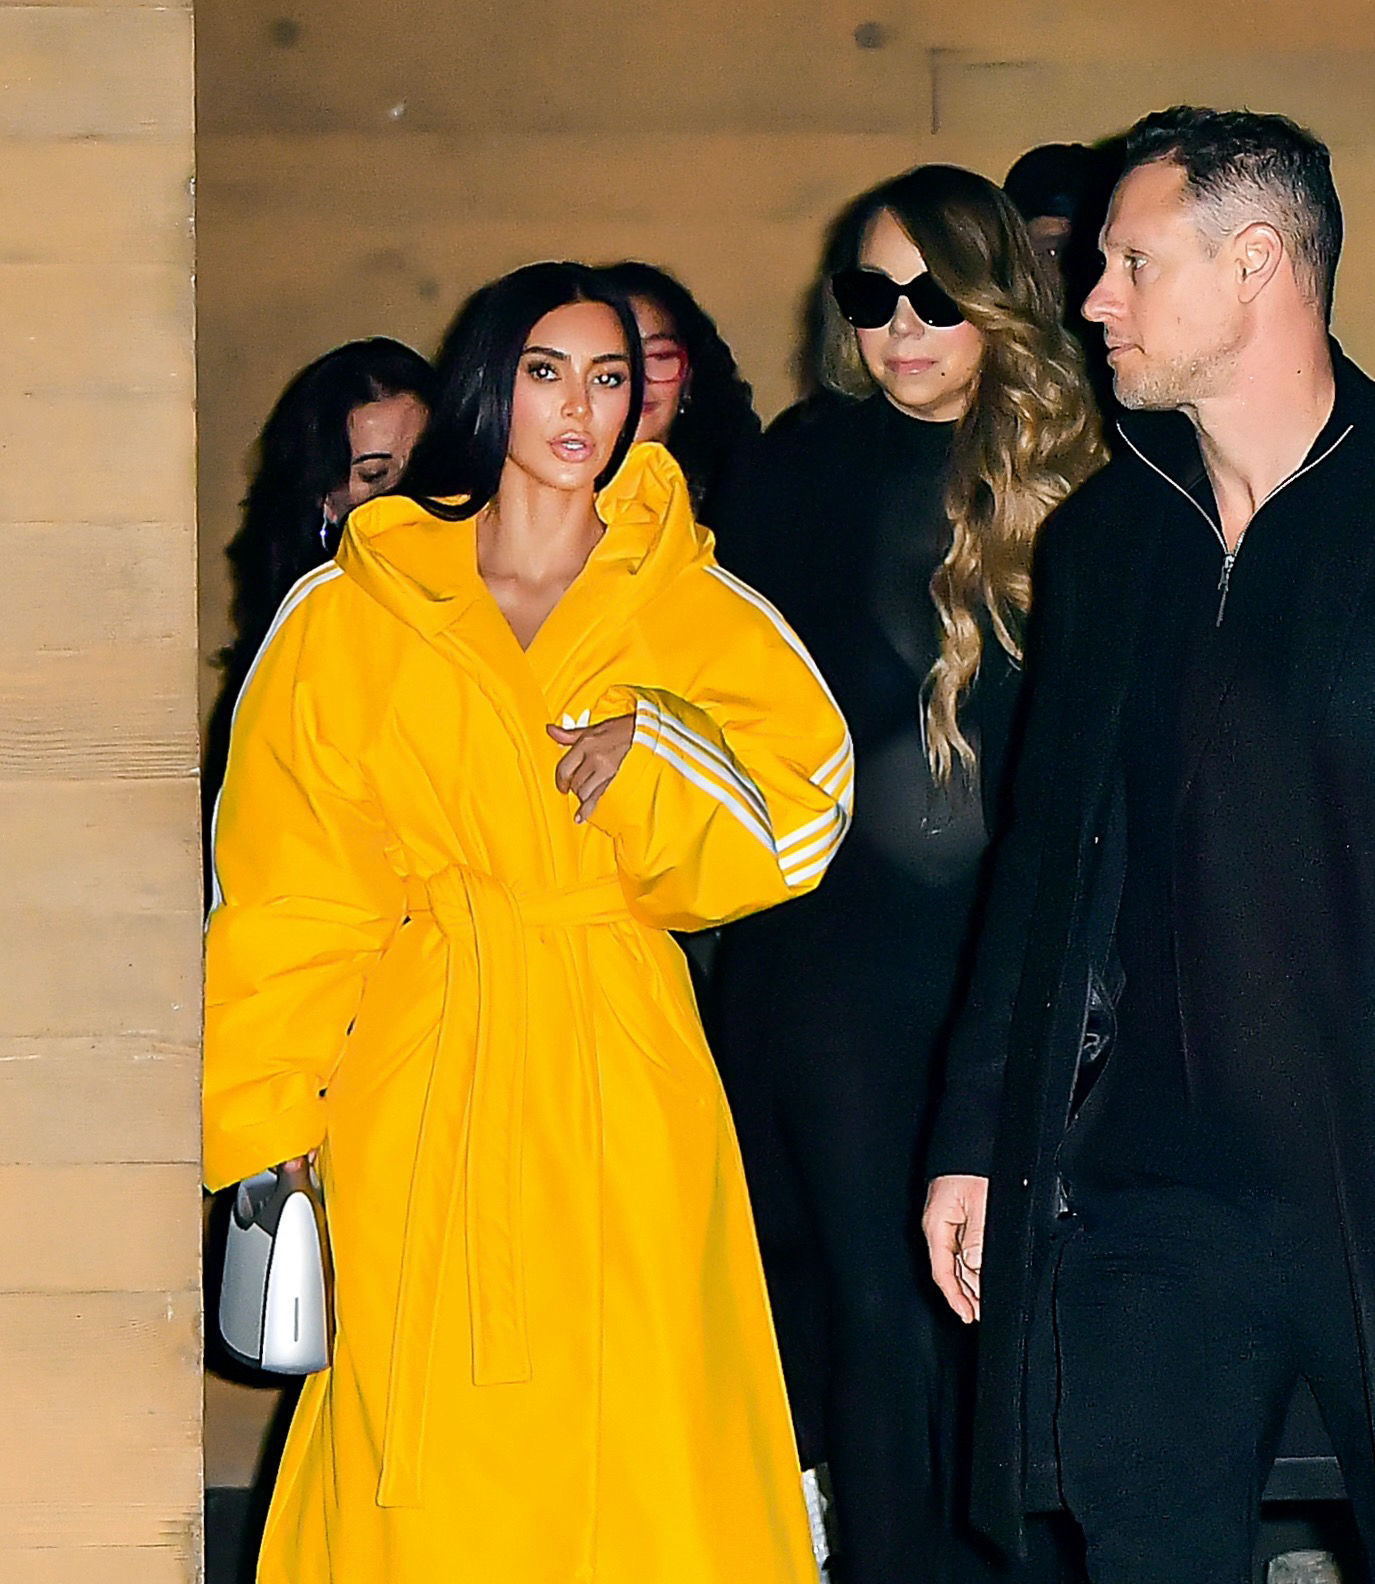 Kim wore a loose-fitting yellow jacket while walking next to pop legend Mariah Carey